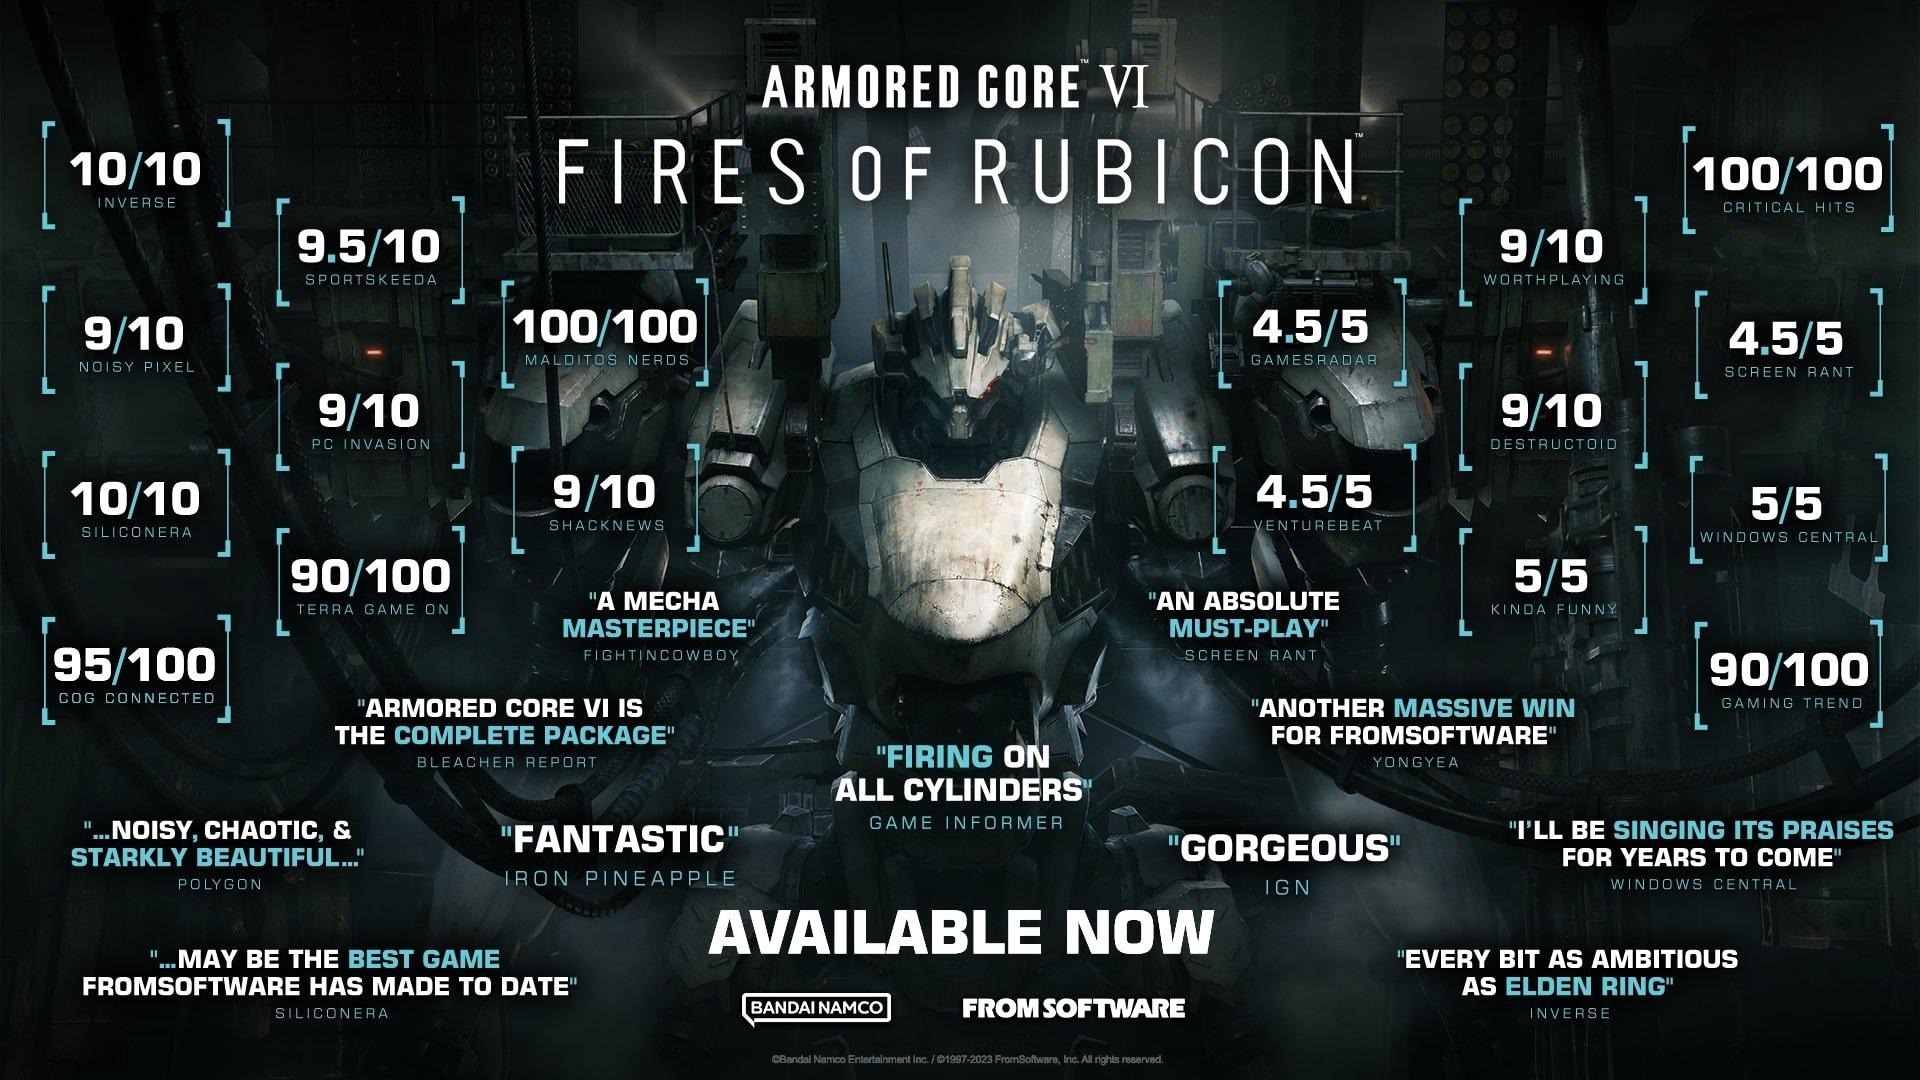 BANDAI NAMCO Entertainment Armored Core VI: Fires of Rubicon (PS4)